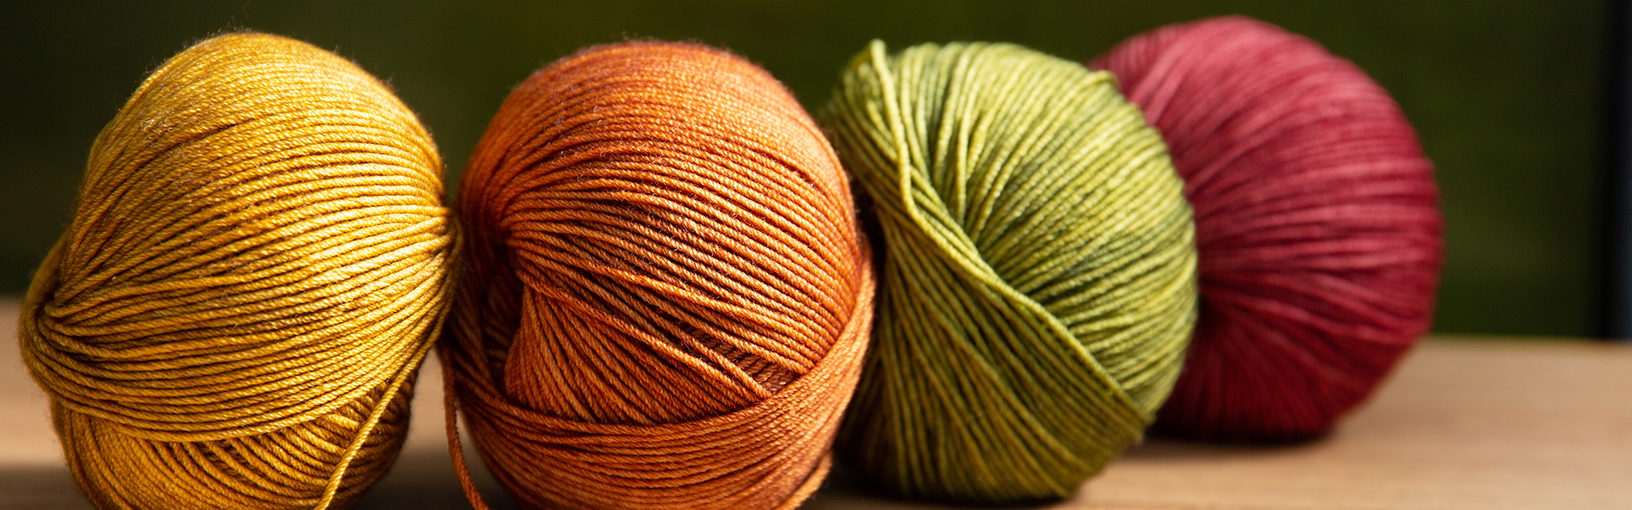 High quality yarns for knitting, crocheting & felting Lana Grossa Yarns | Spring / Summer